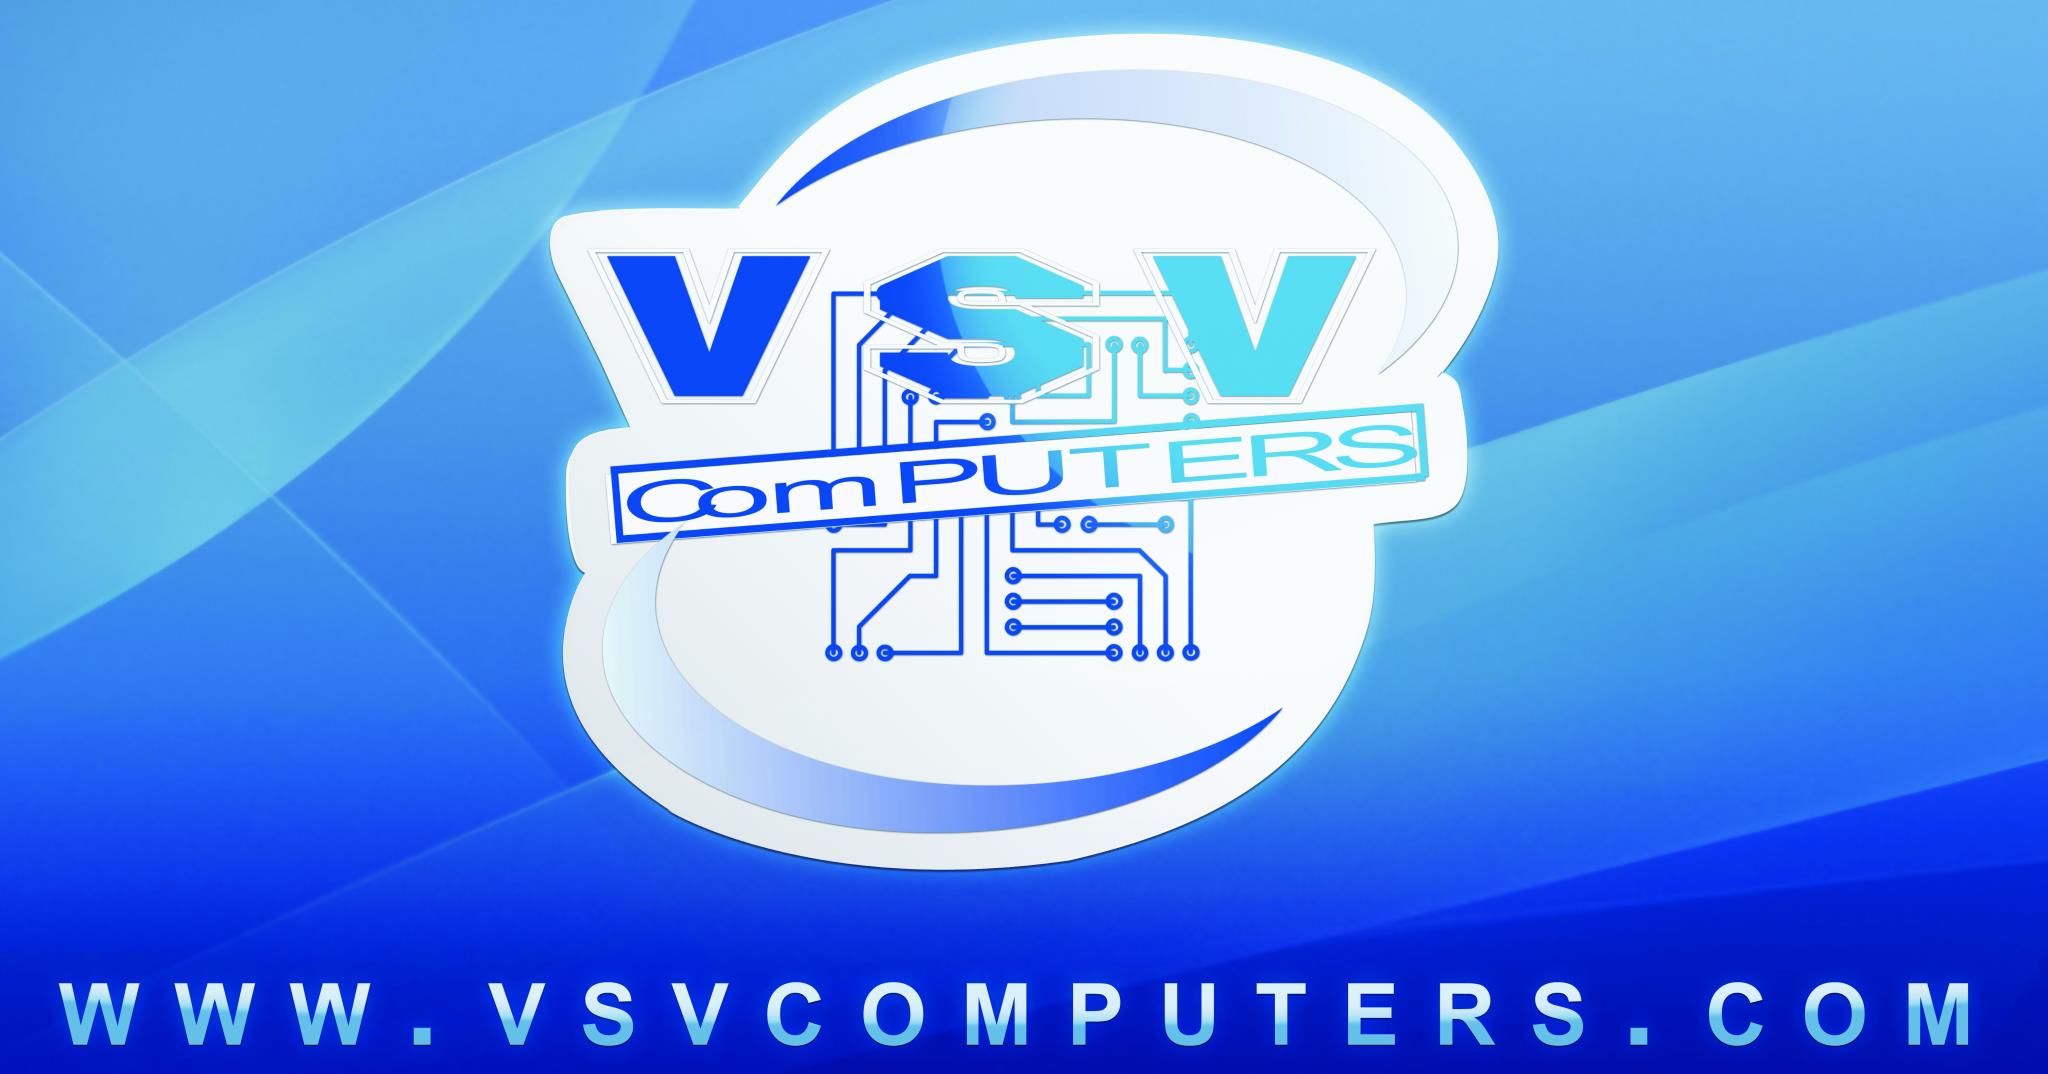 VSV Computers